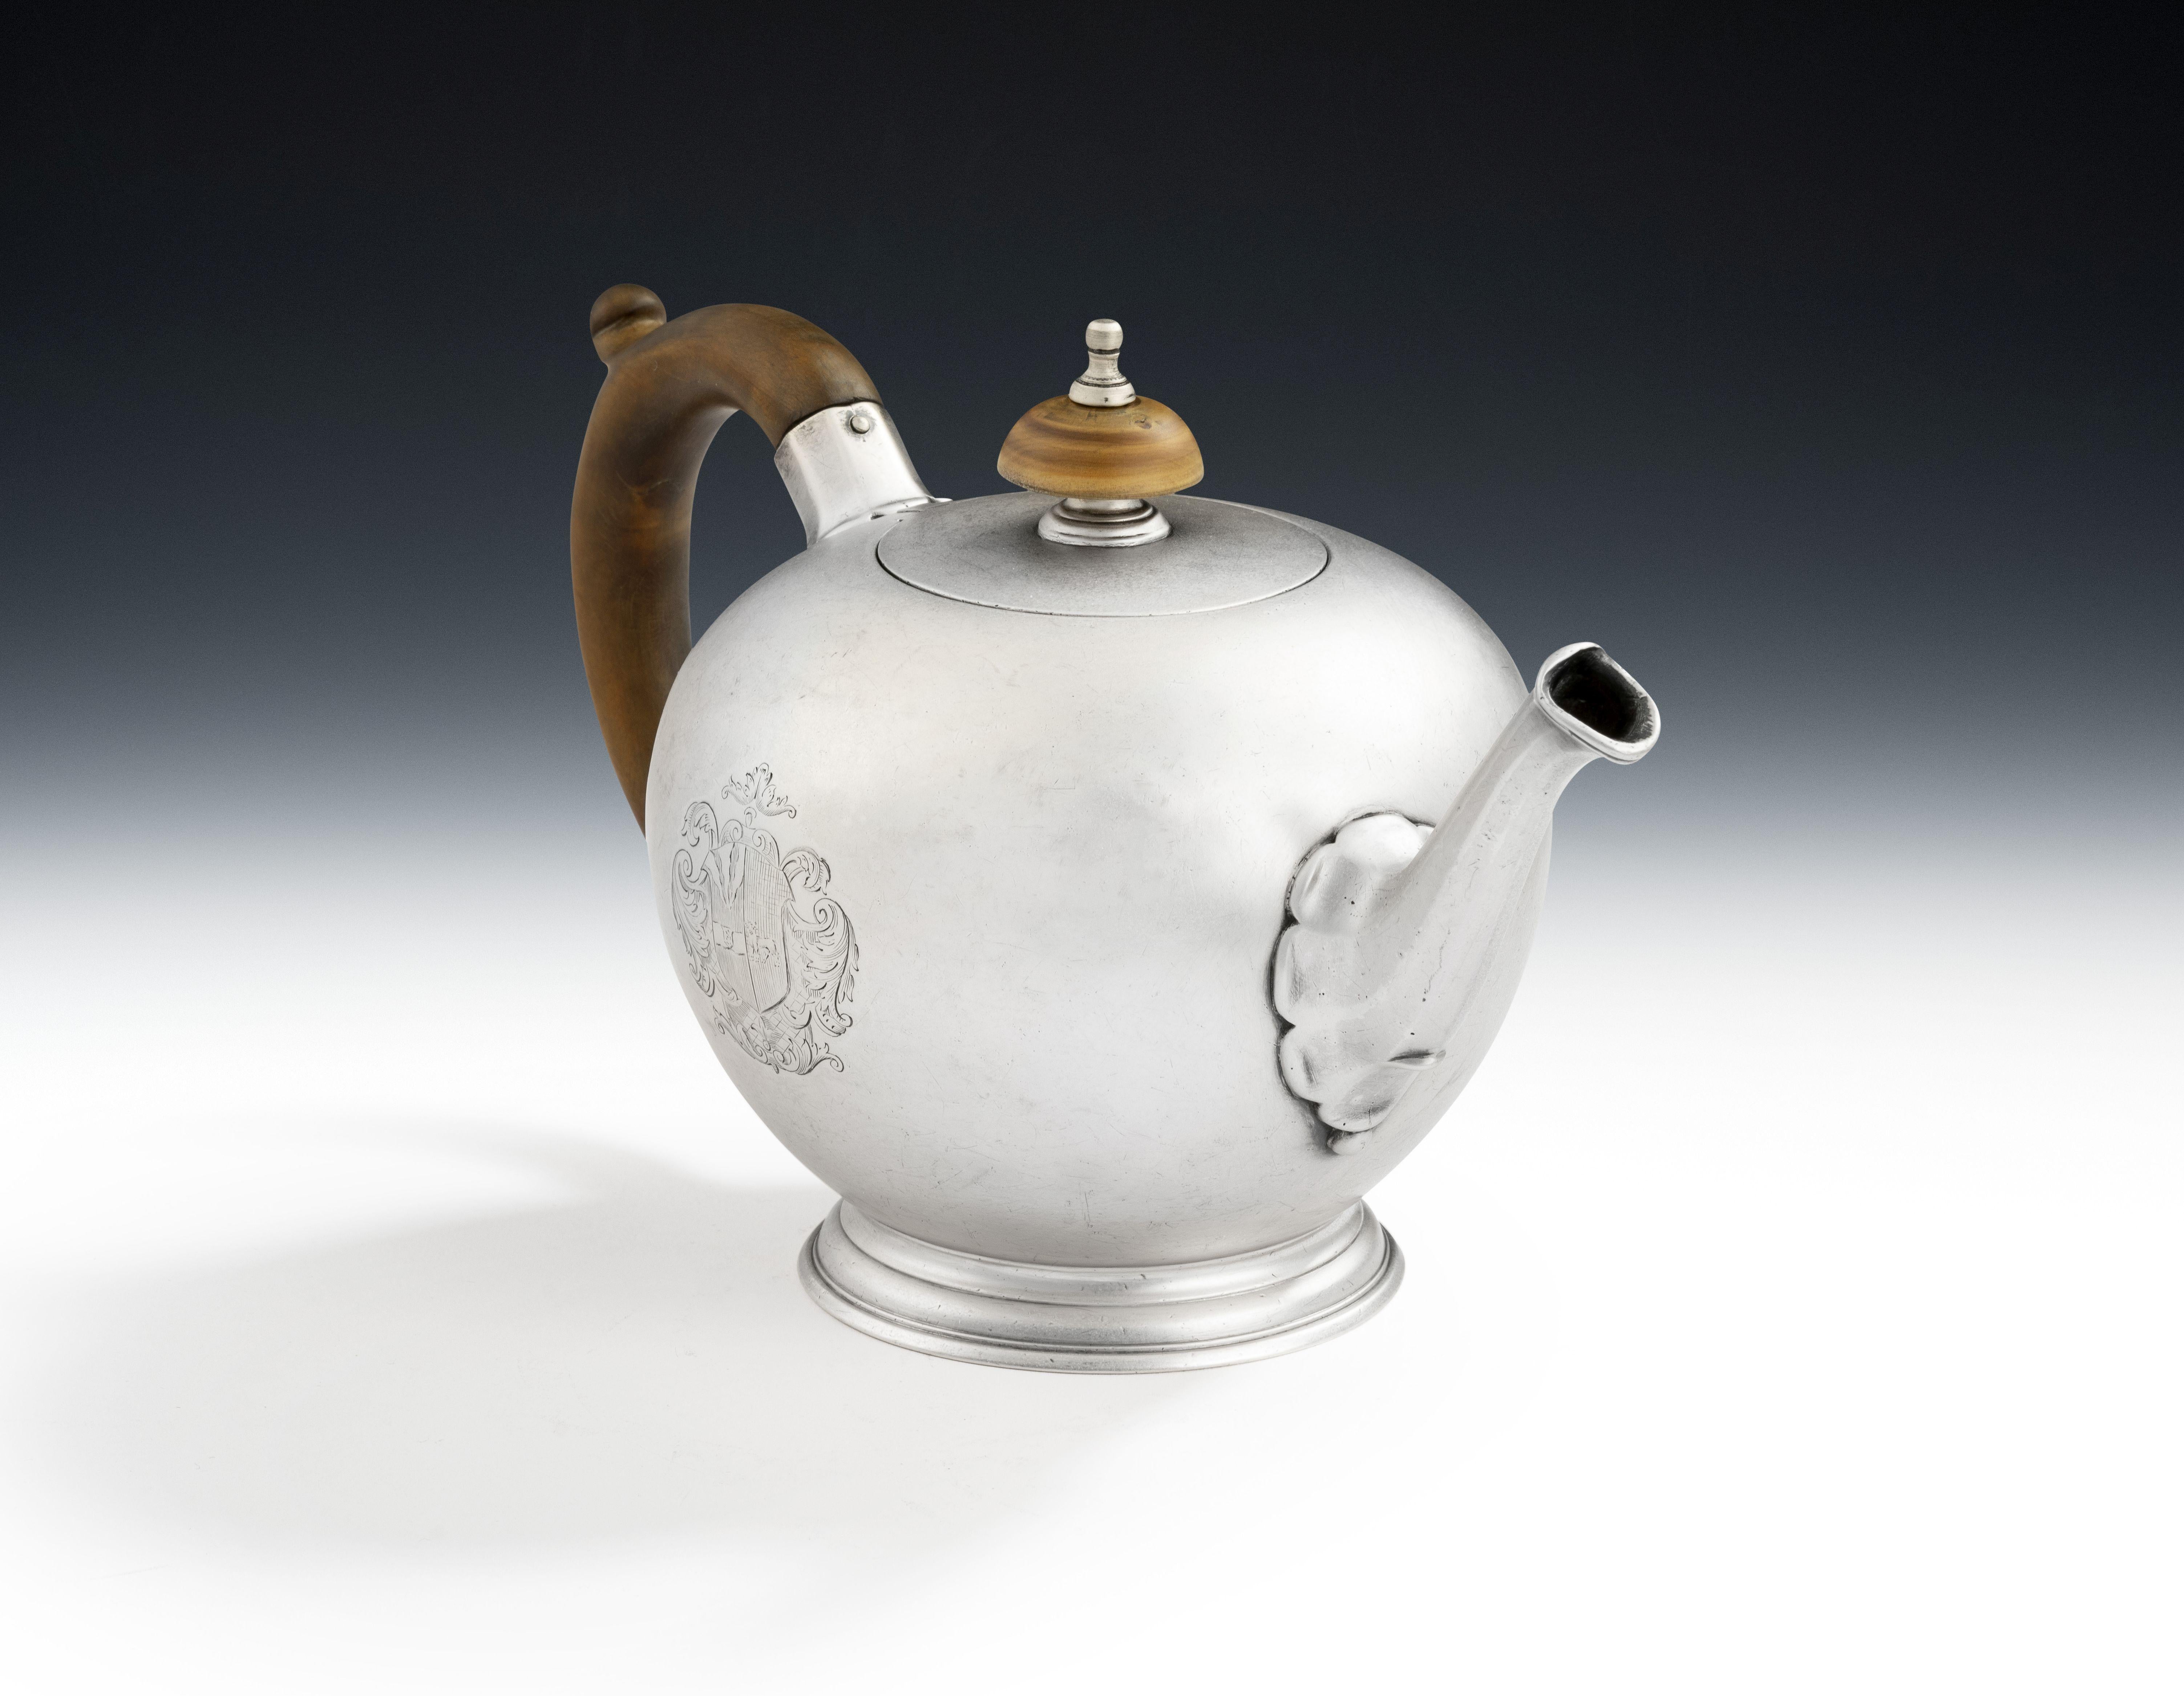 A Very Fine George II Bullet Teapot Made in London in 1734 by John Swift

The 